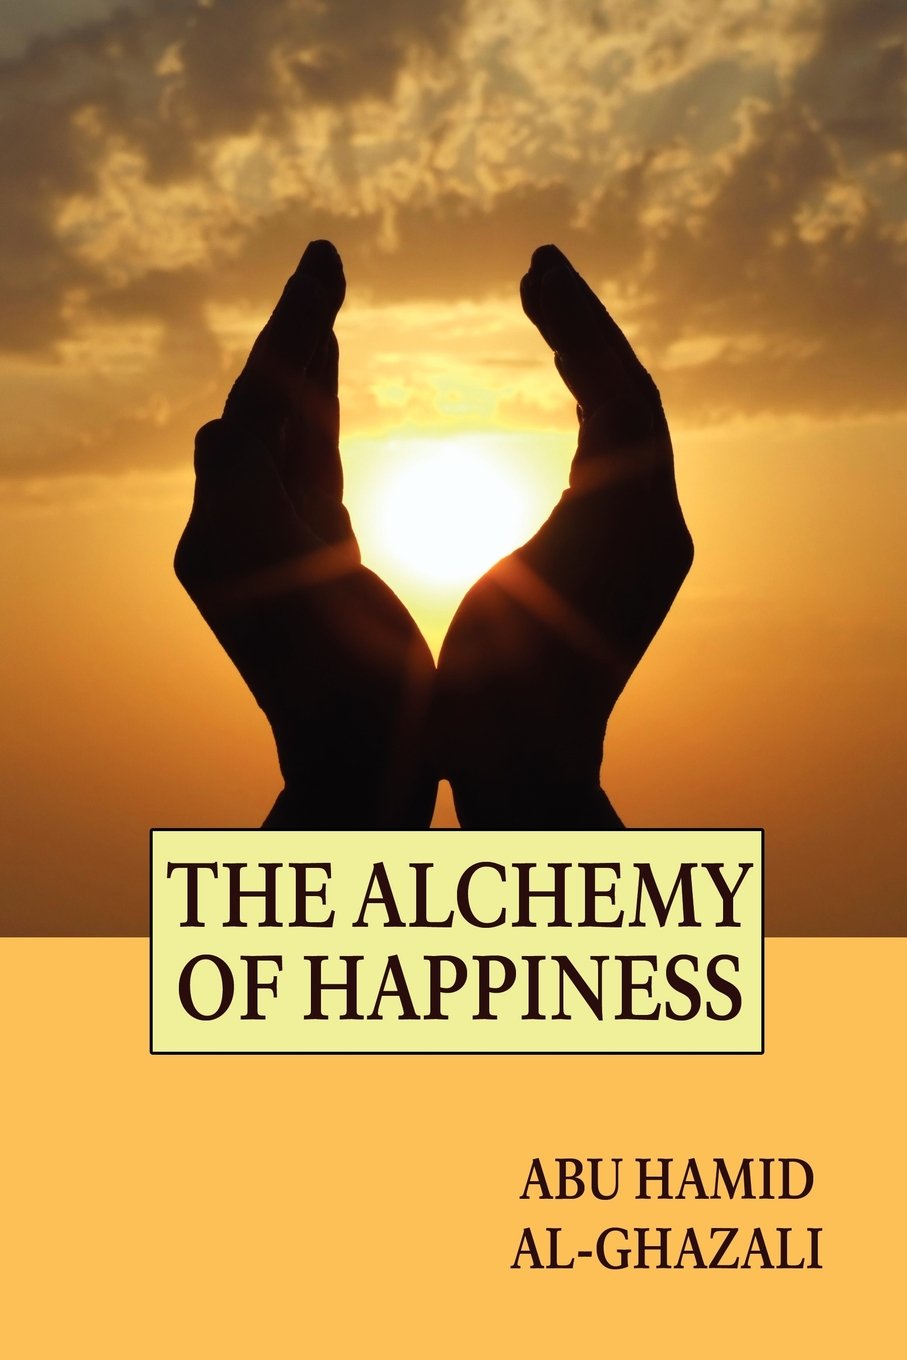 Al-Ghazali: The Alchemist of Happiness (2004) Screenshot 1